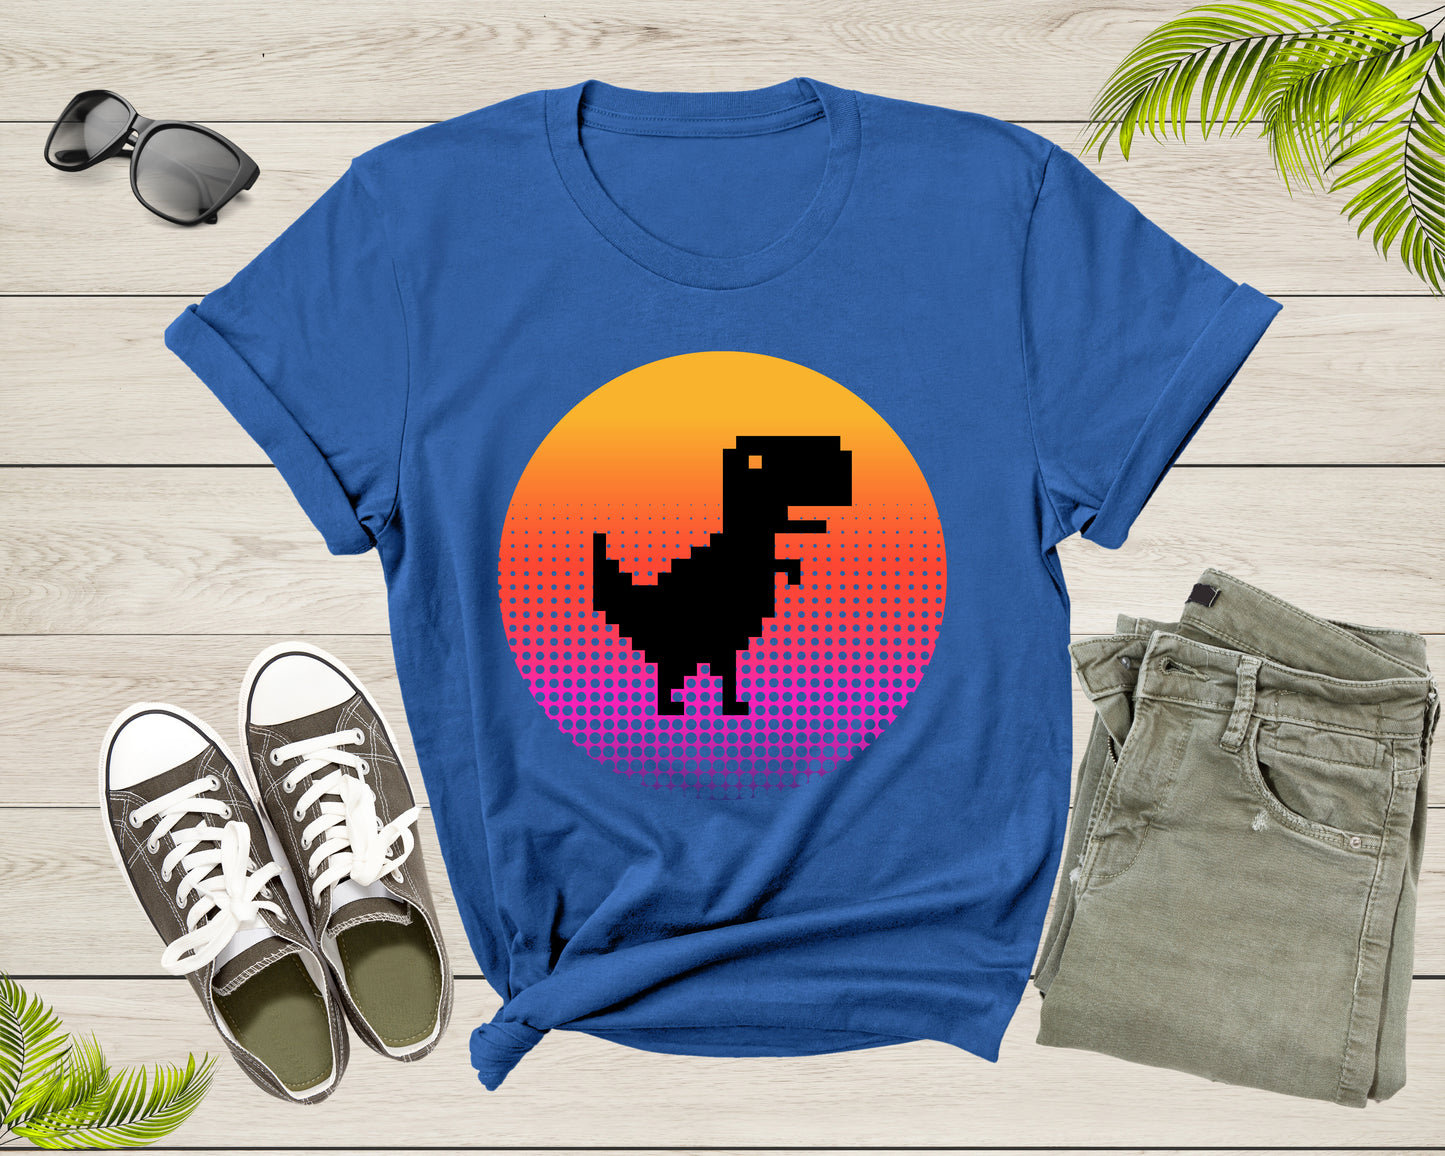 Cool Dinosaur T-Rex Animal Bird at Sunset for Men Women Kids T-Shirt Dino T Shirt Gift for Men Women Kids Boys Girls Trex Dino Tshirt